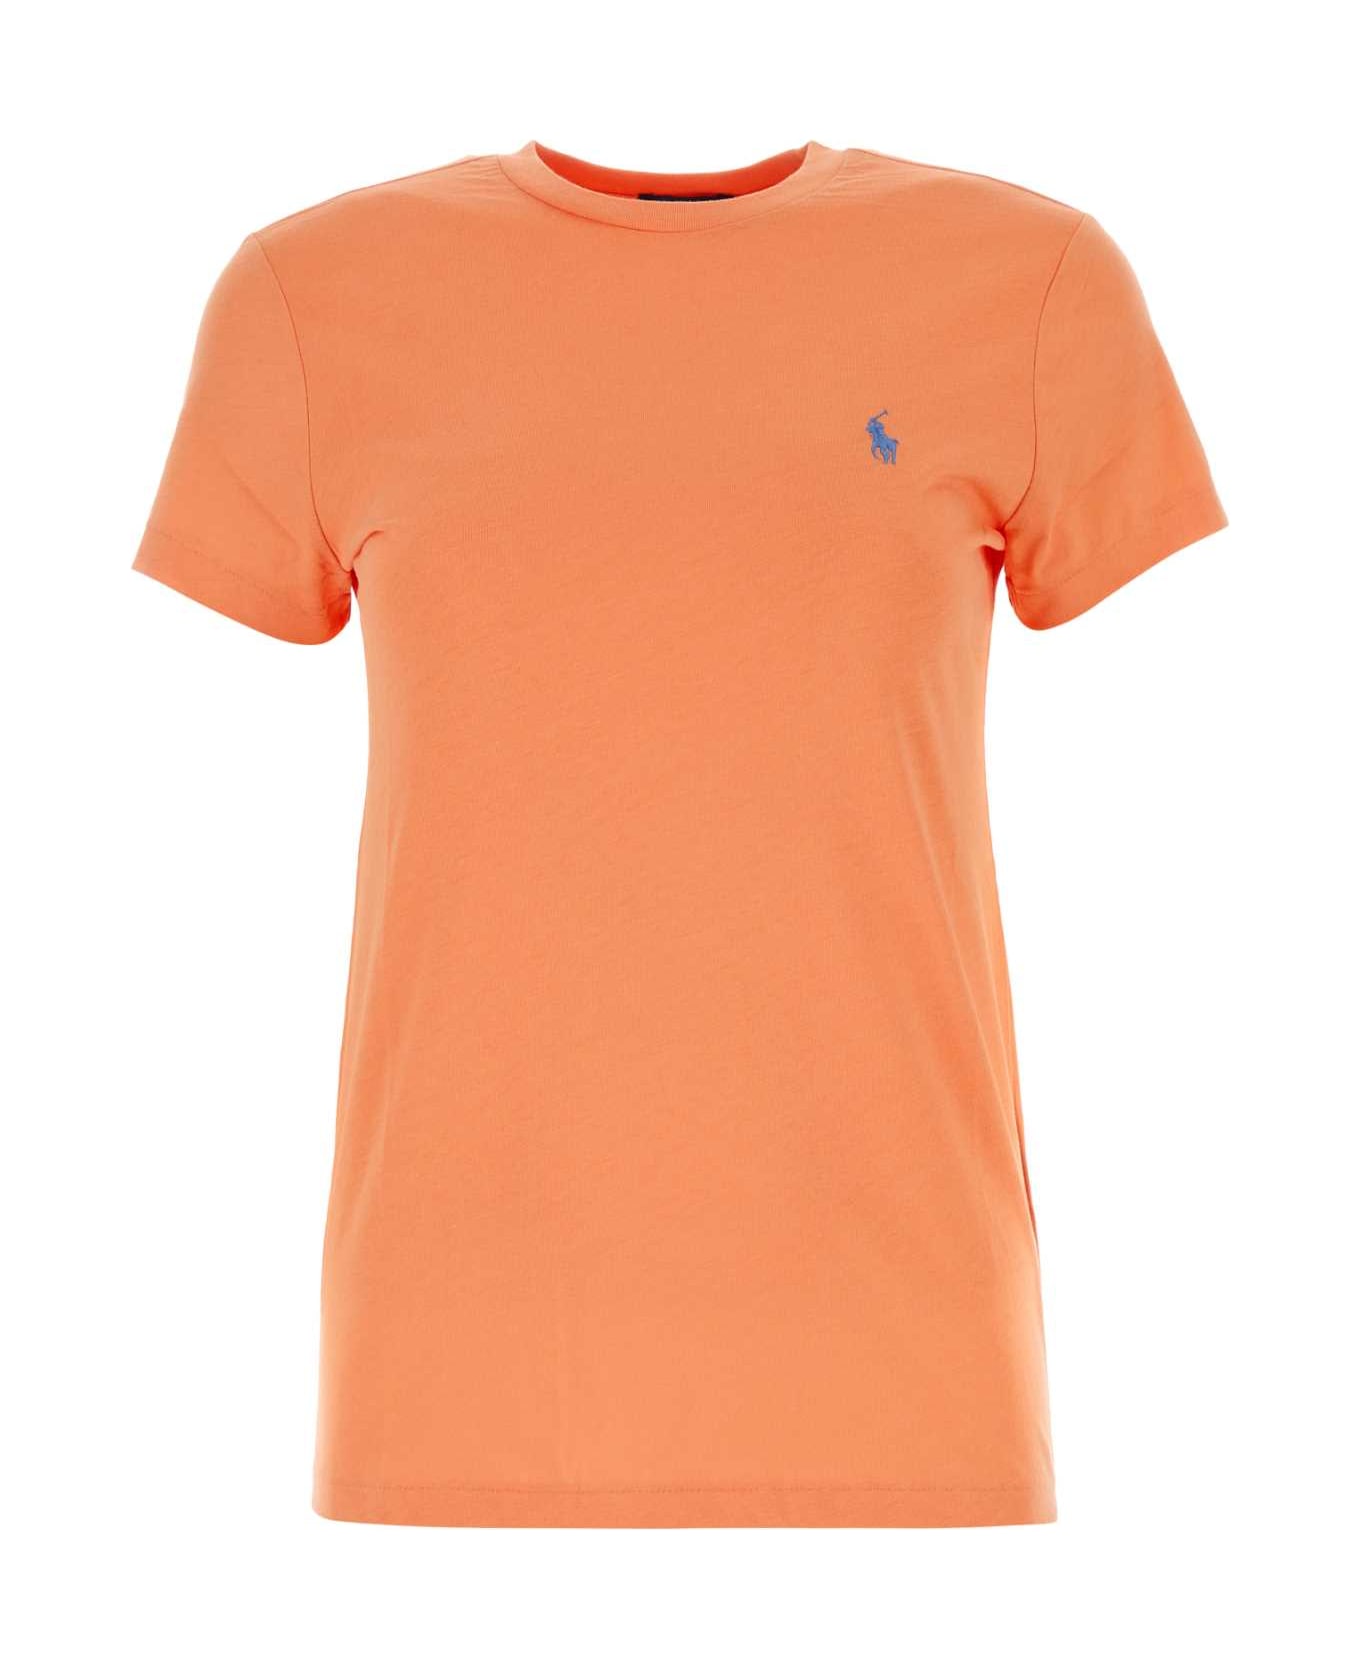 Polo Ralph Lauren Orange Cotton T-shirt - PEACHTREE